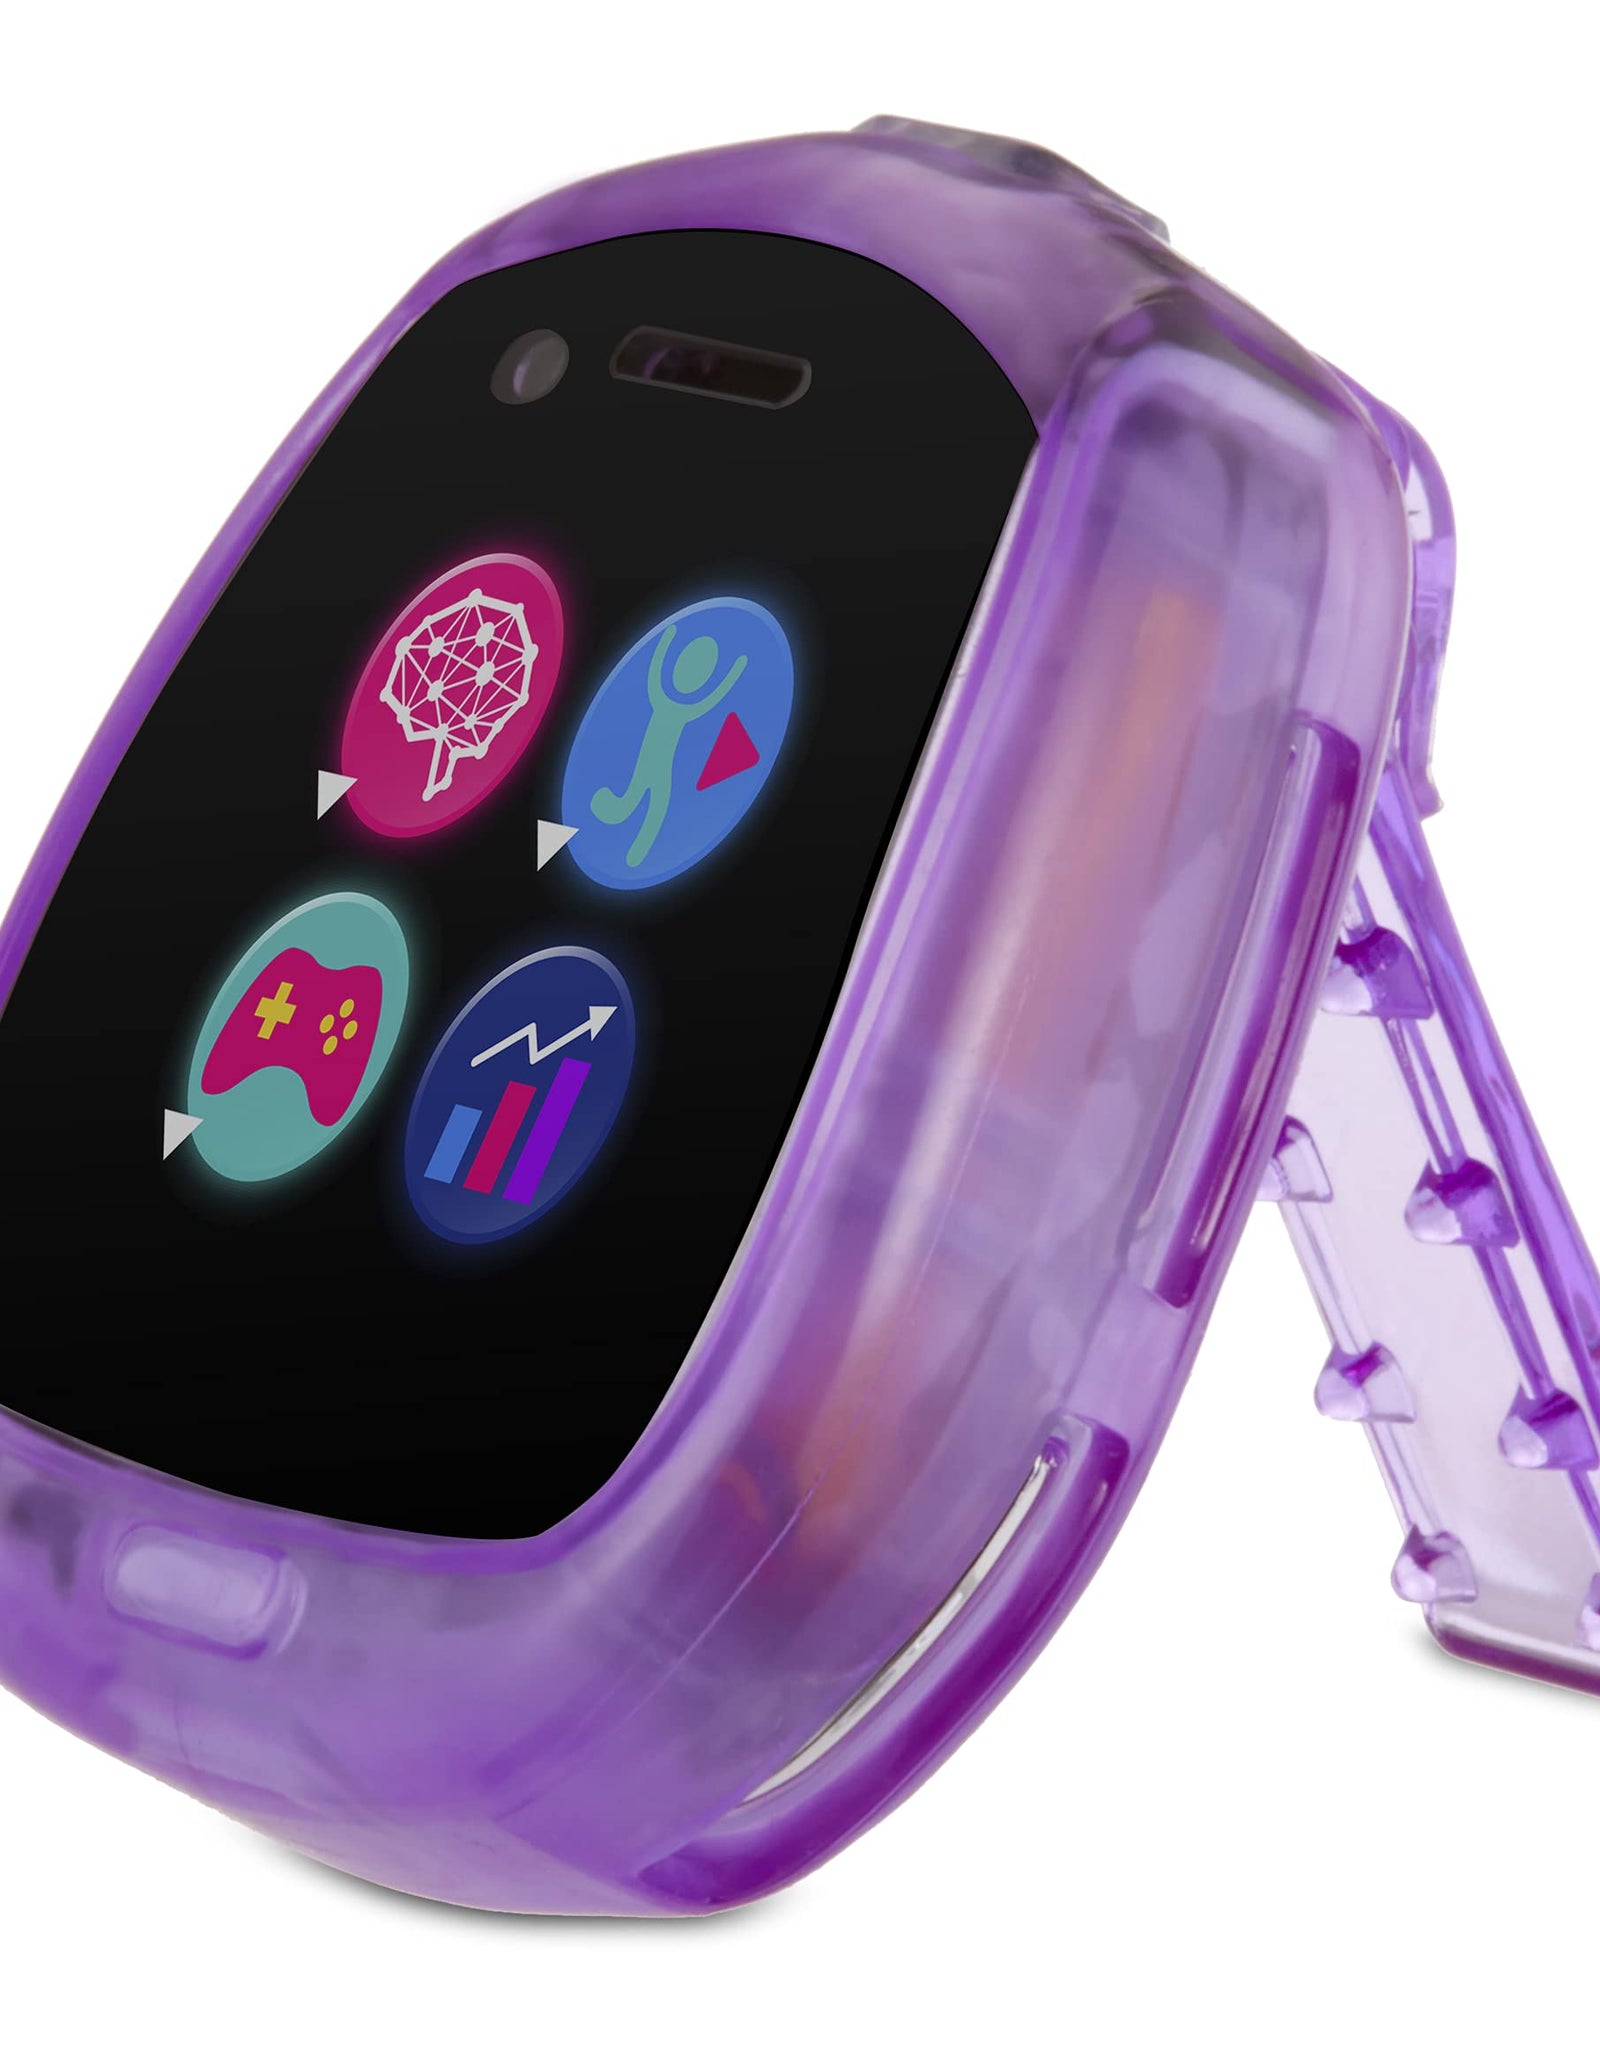 Little Tikes Tobi 2 Robot Purple Smartwatch- 2 Cameras, Interactive Robot, Games, Videos, Selfies, Pedometer & More, Touchscreen, Parental Control- Stem Gifts, Smartwatch for Kids Boys Girls 6 7 8+